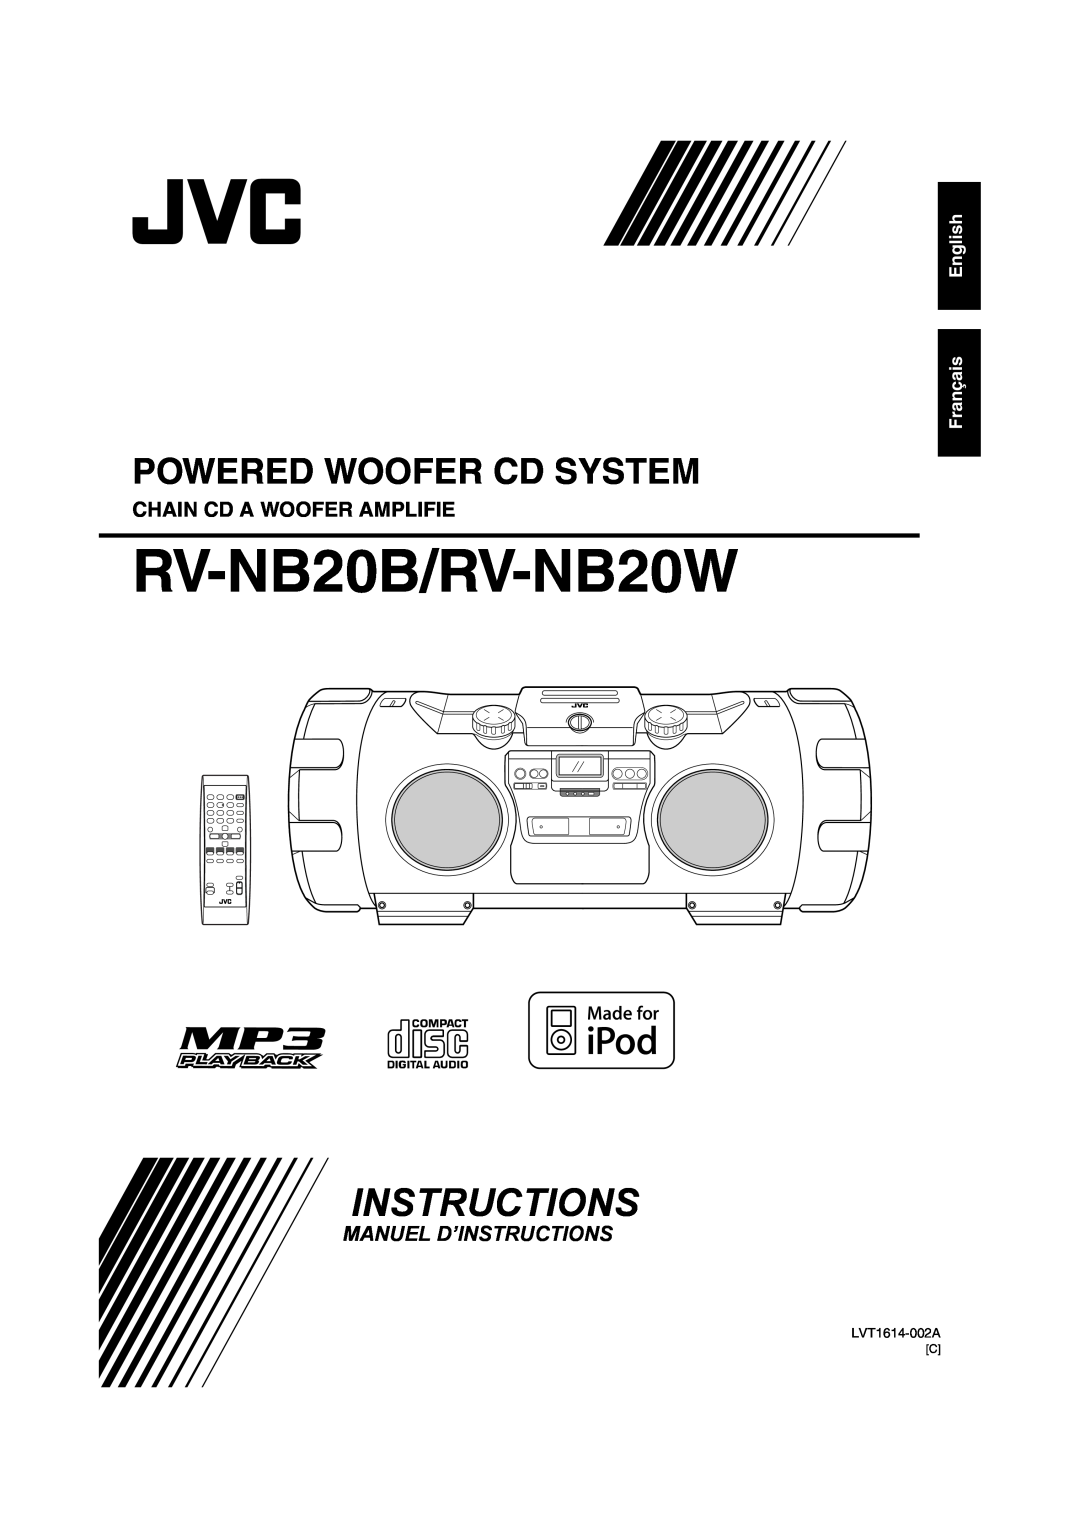 JVC manual Chain Cd A Woofer Amplifie, English, Français, RV-NB20B/RV-NB20W, Instructions, Powered Woofer Cd System 